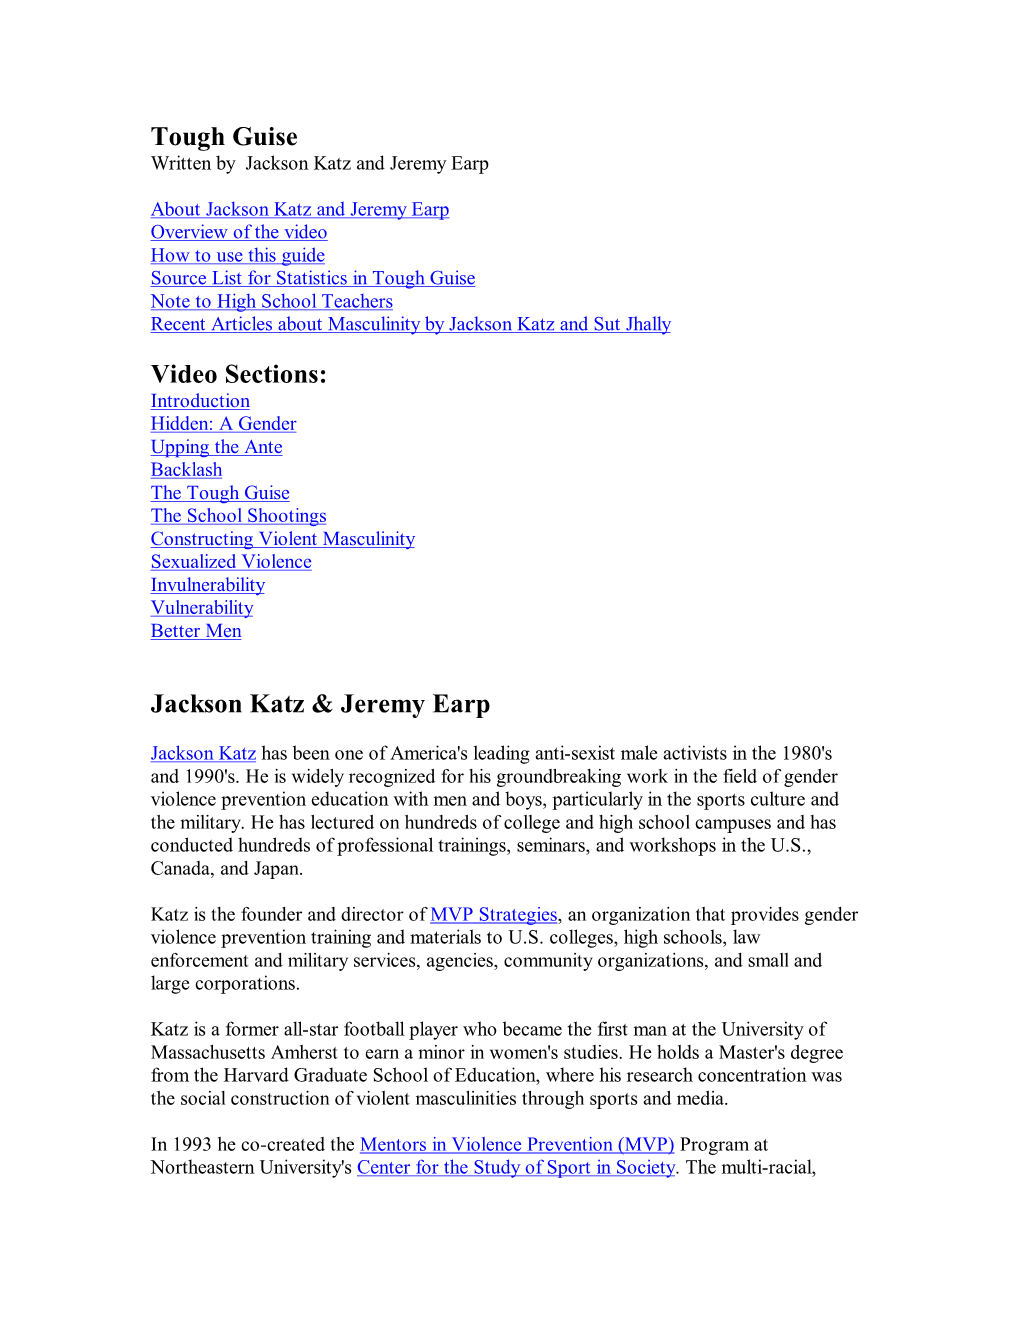 Tough Guise Video Sections: Jackson Katz & Jeremy Earp